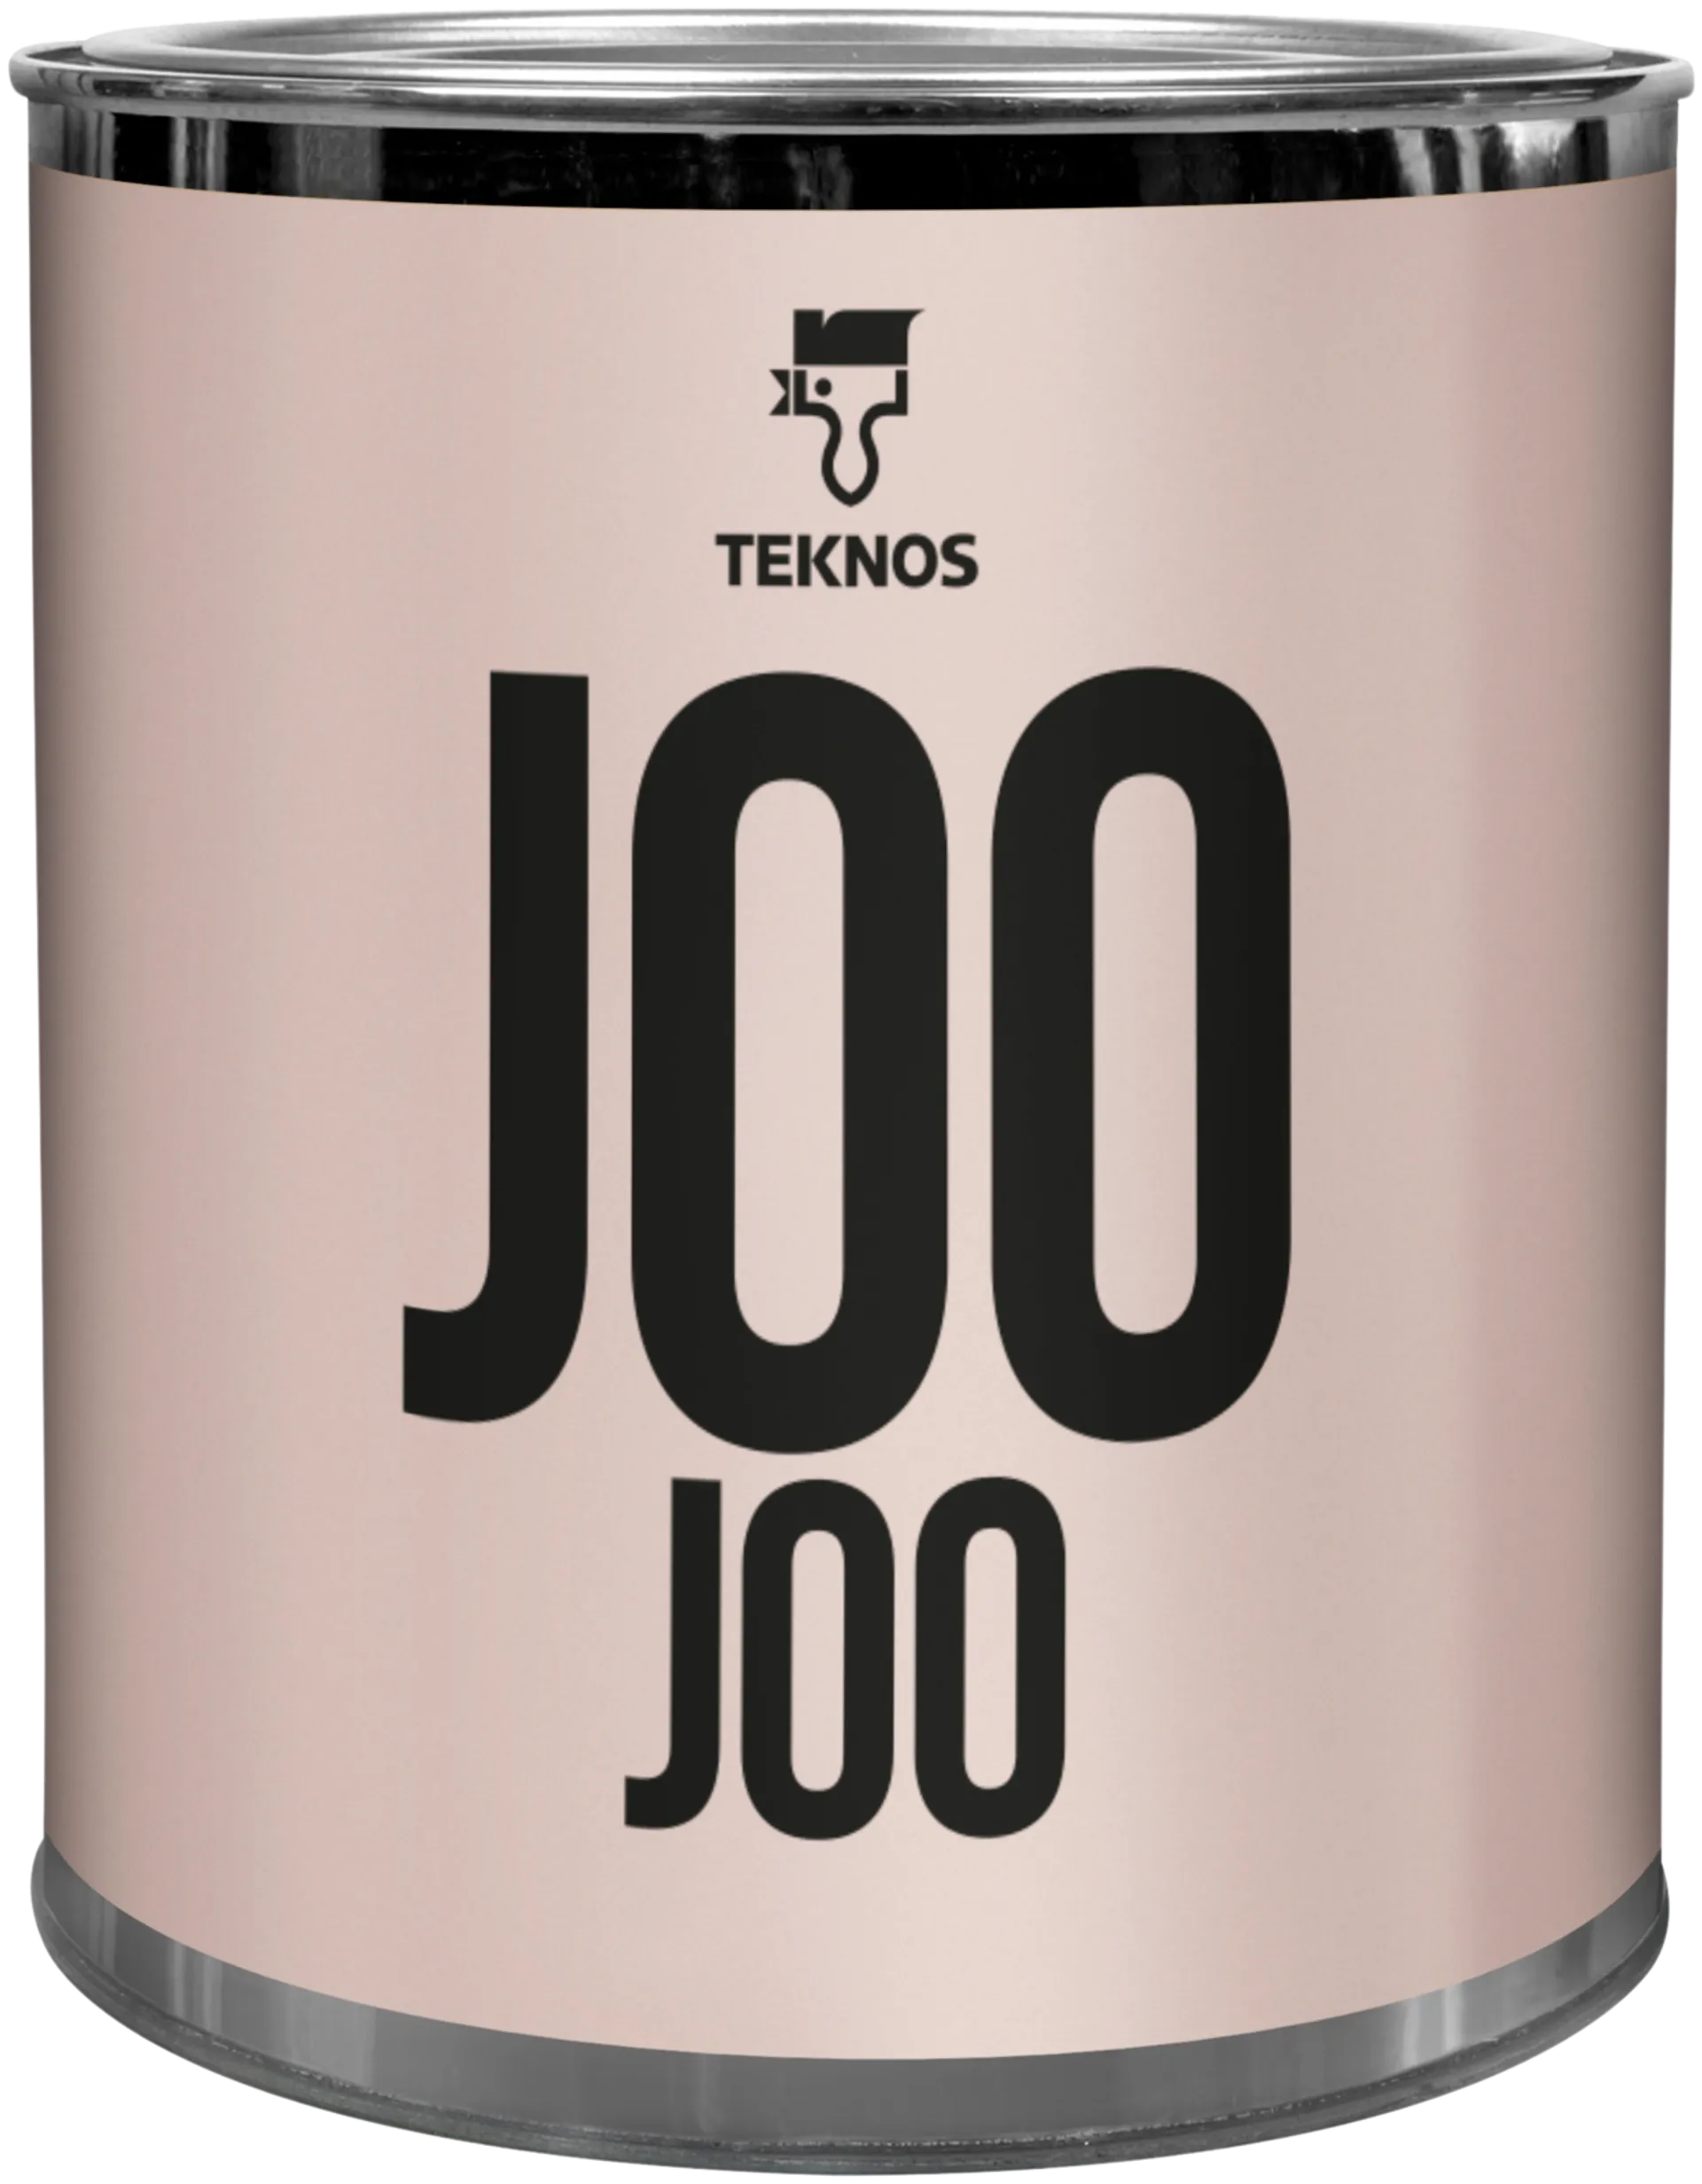 Teknos Colour sample Joo joo T1511